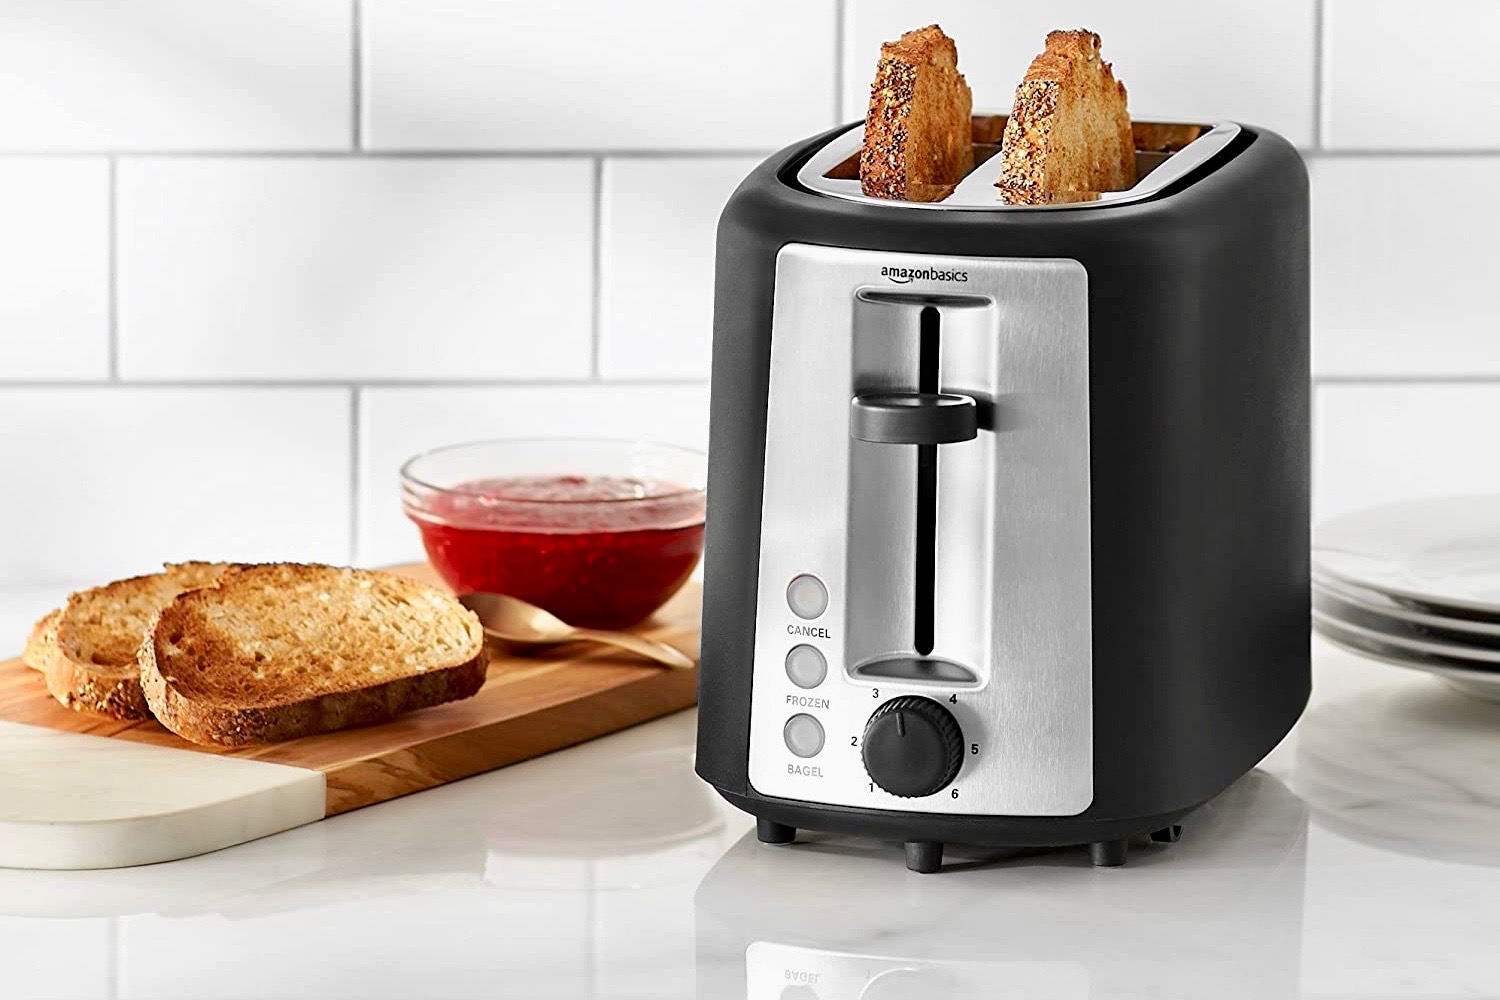 https://www.digitaltrends.com/wp-content/uploads//2021/01/amazon-basics-best-toasters-1.jpg?fit=500%2C334&p=1